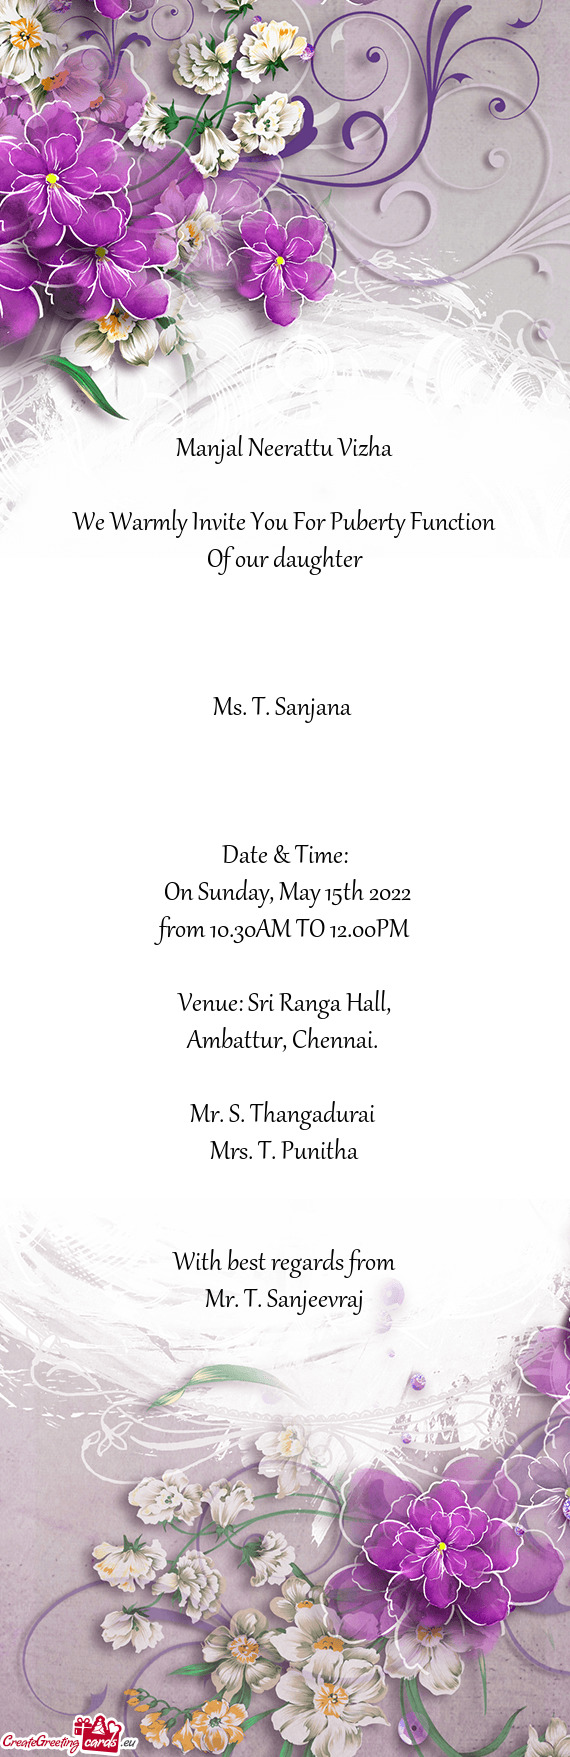 Mr. S. Thangadurai